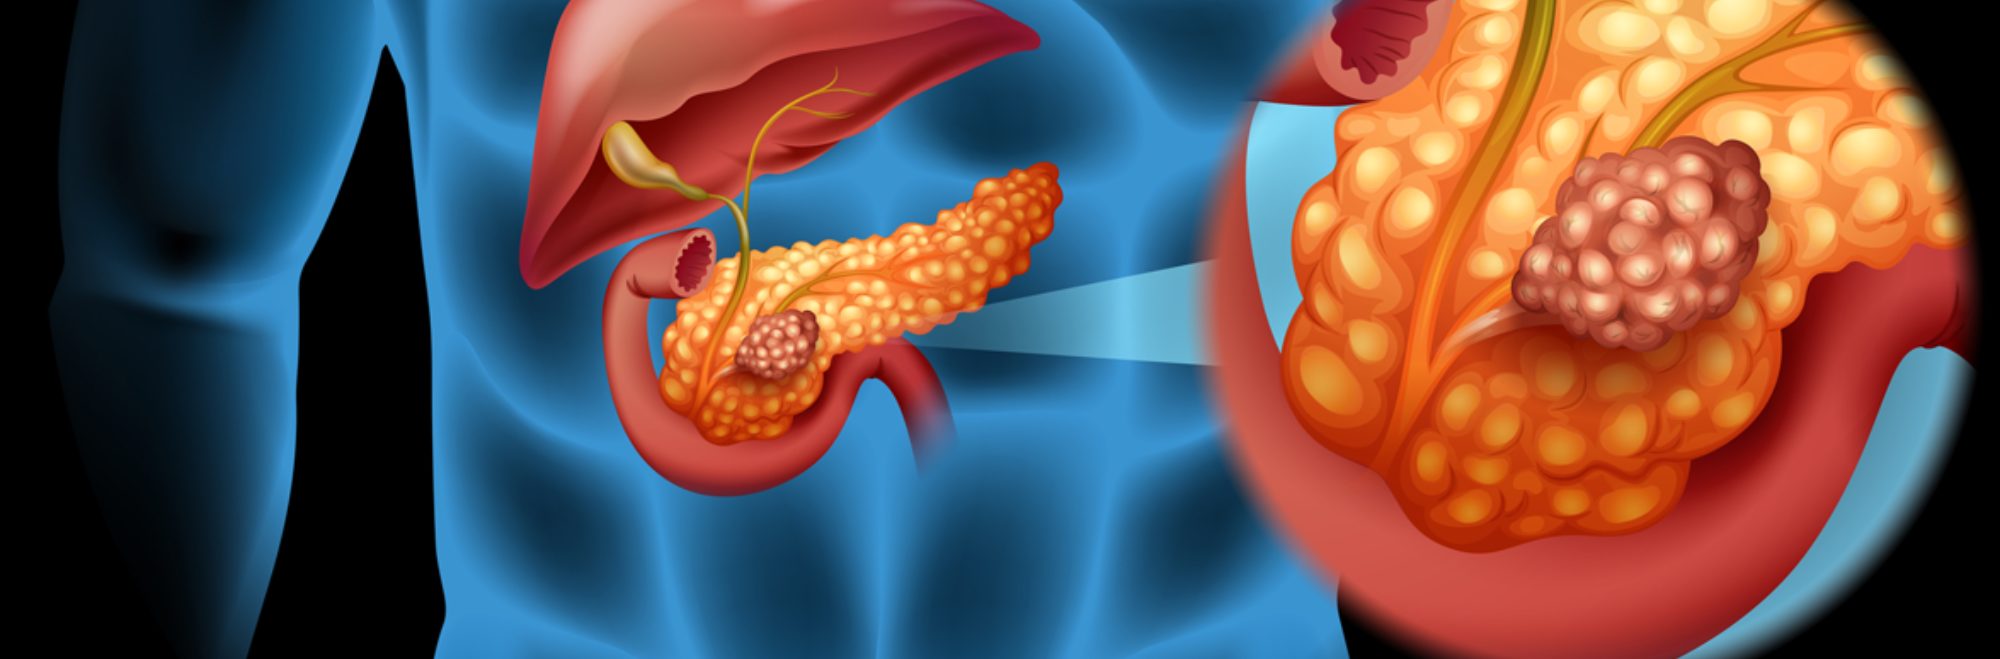 Pancreas Function Pancreatic Cancer Johns Hopkins Pathology